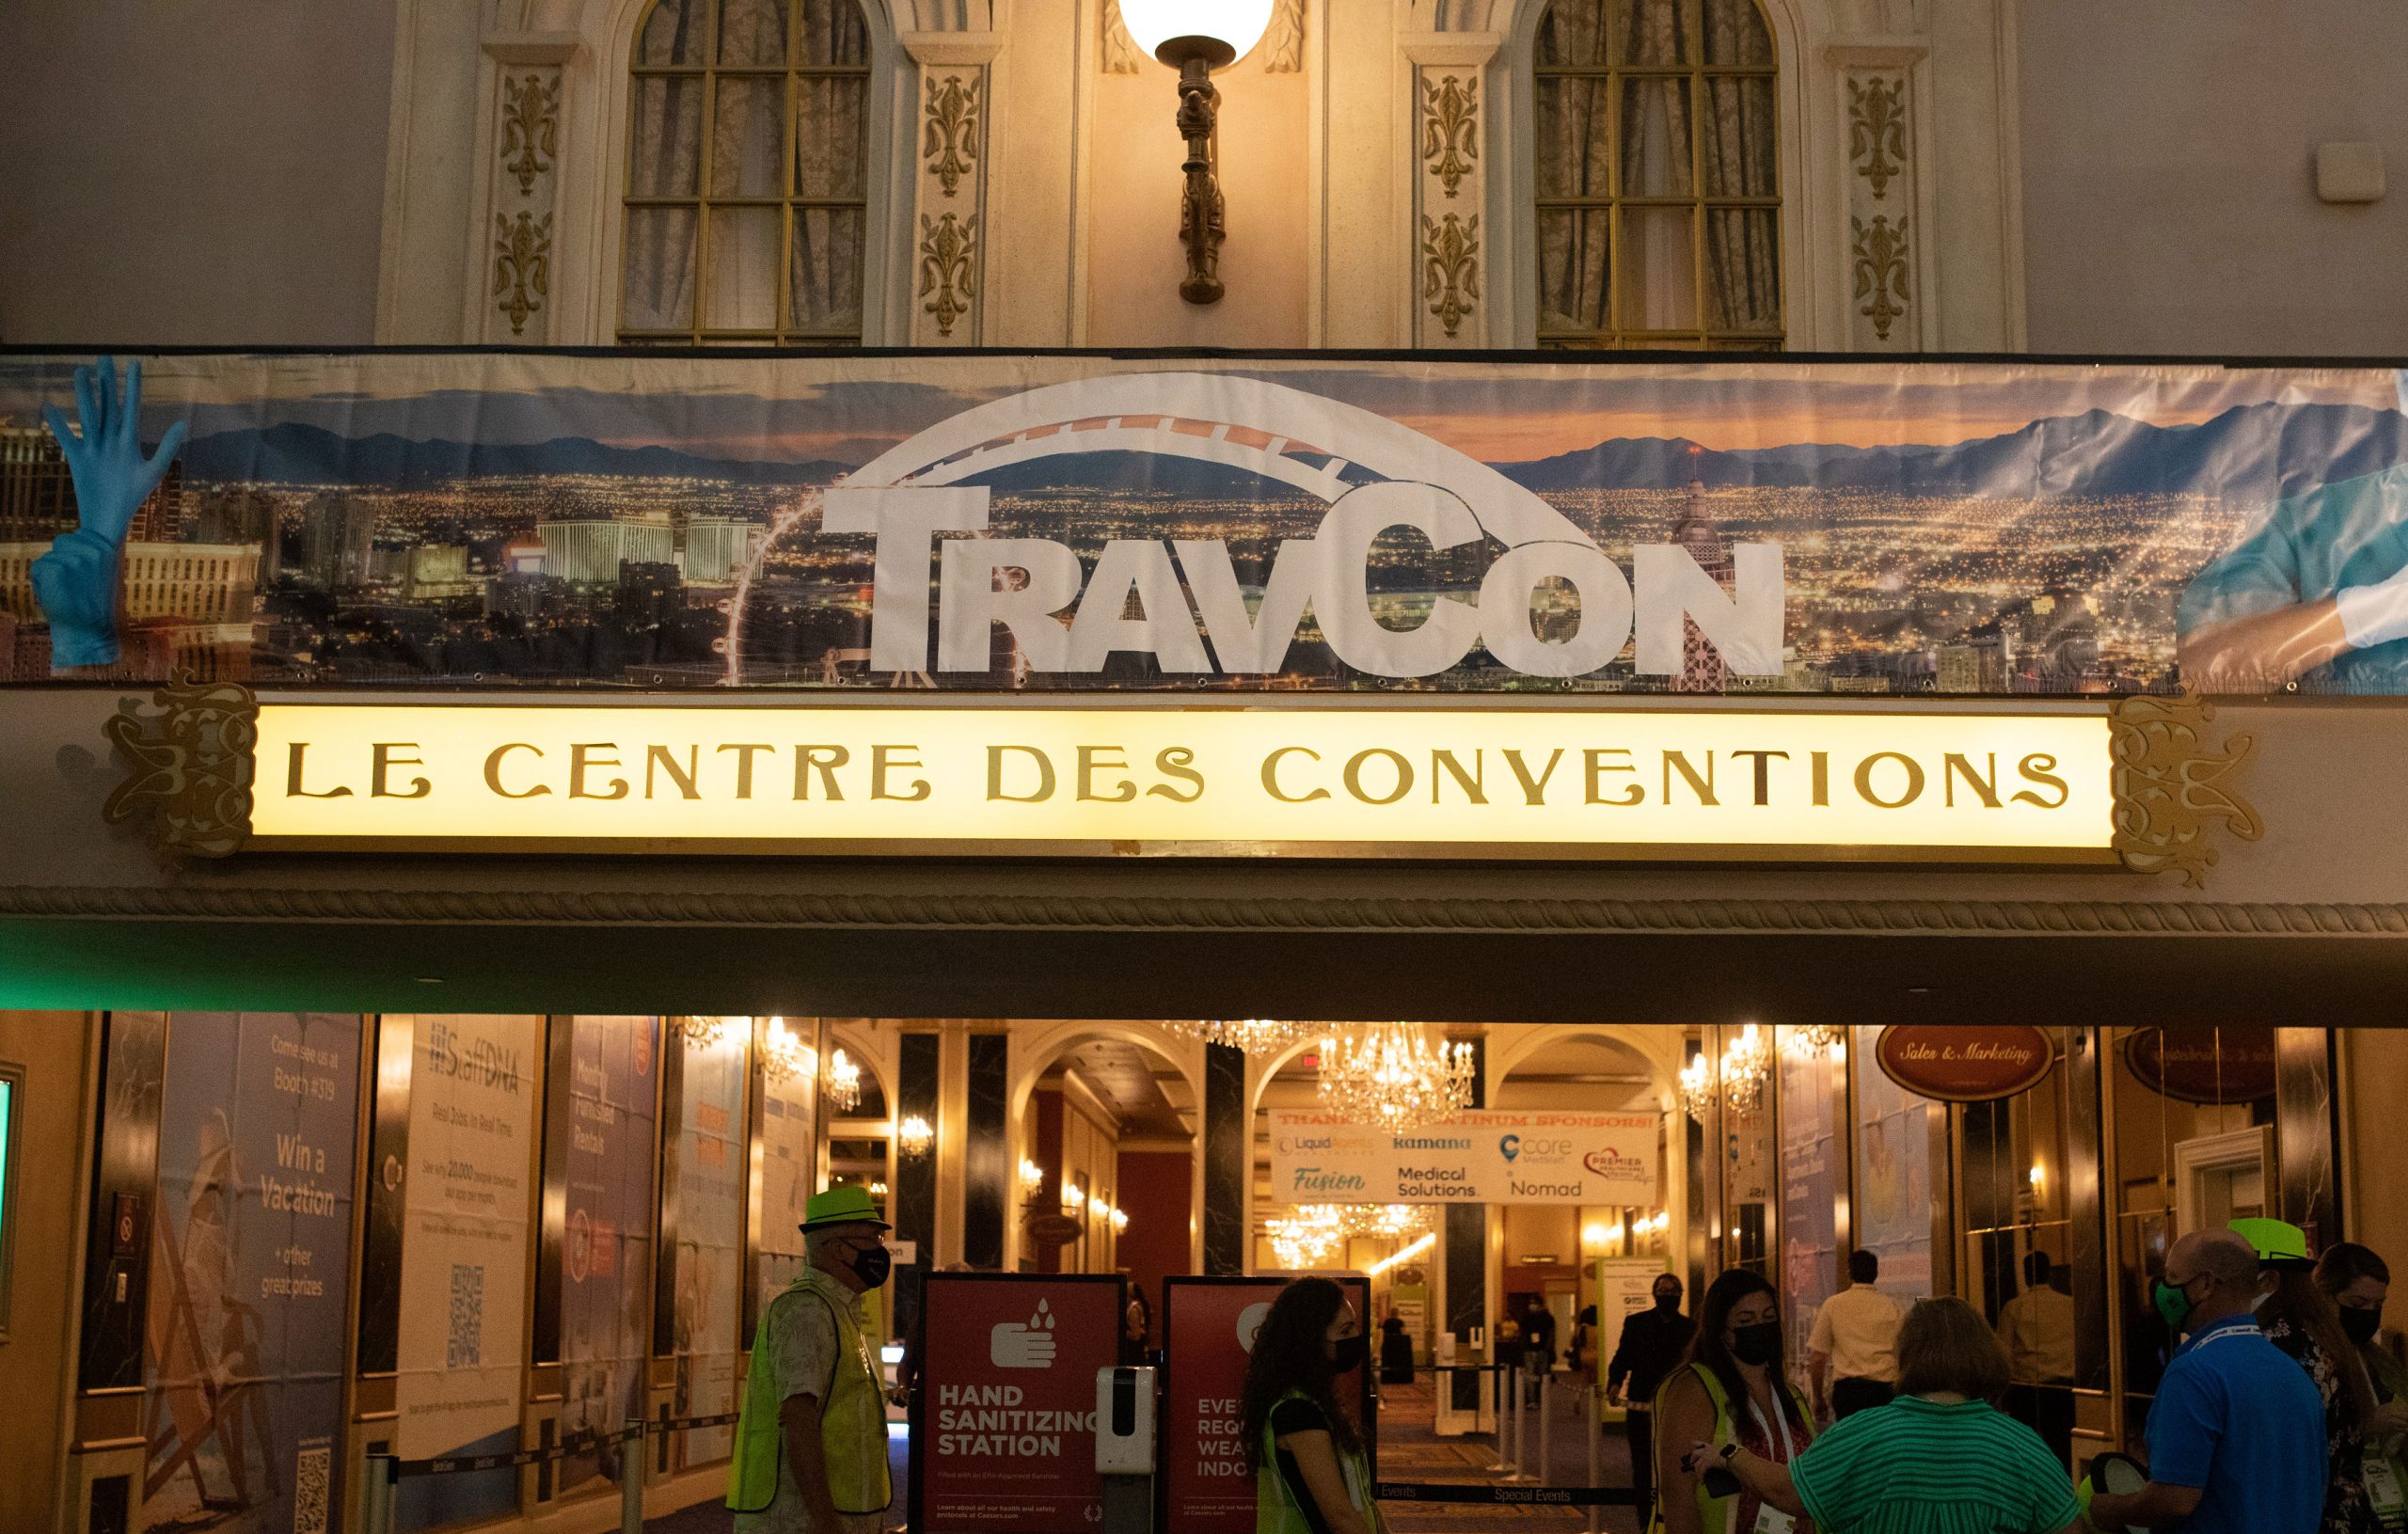 Hotel & Travel - TravCon